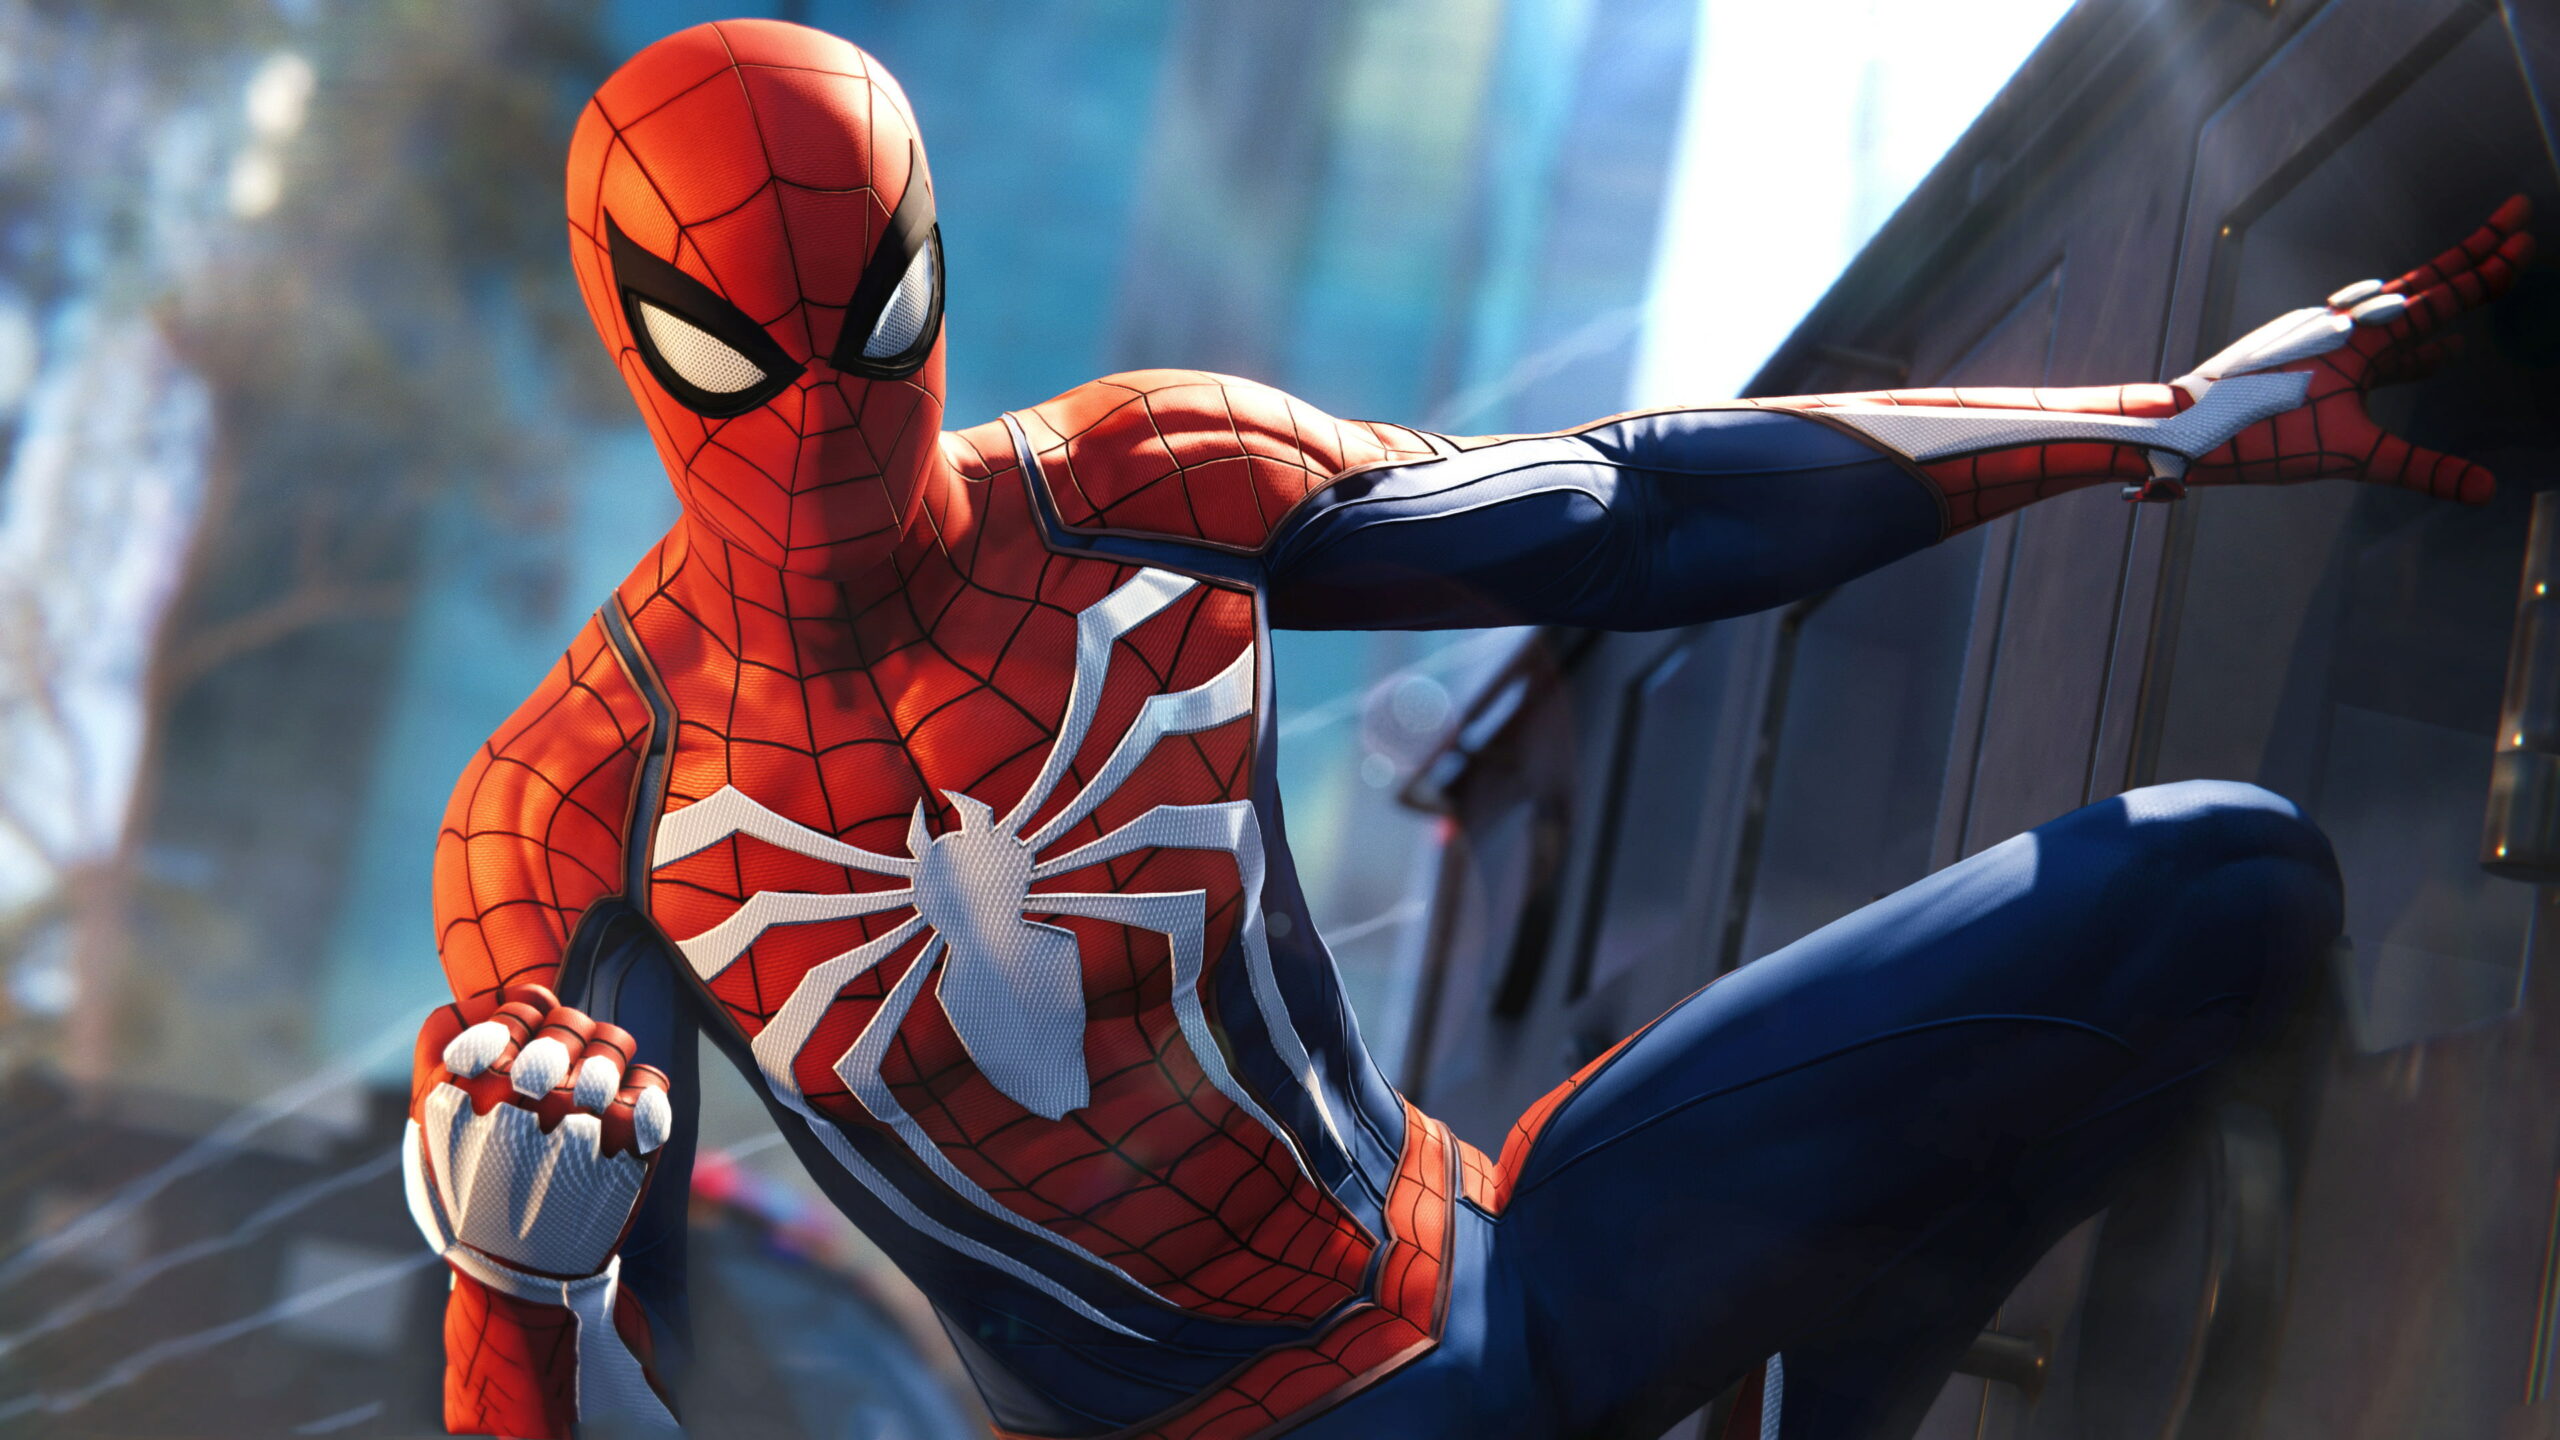 Insomniac Games Marvel's Spider-Man